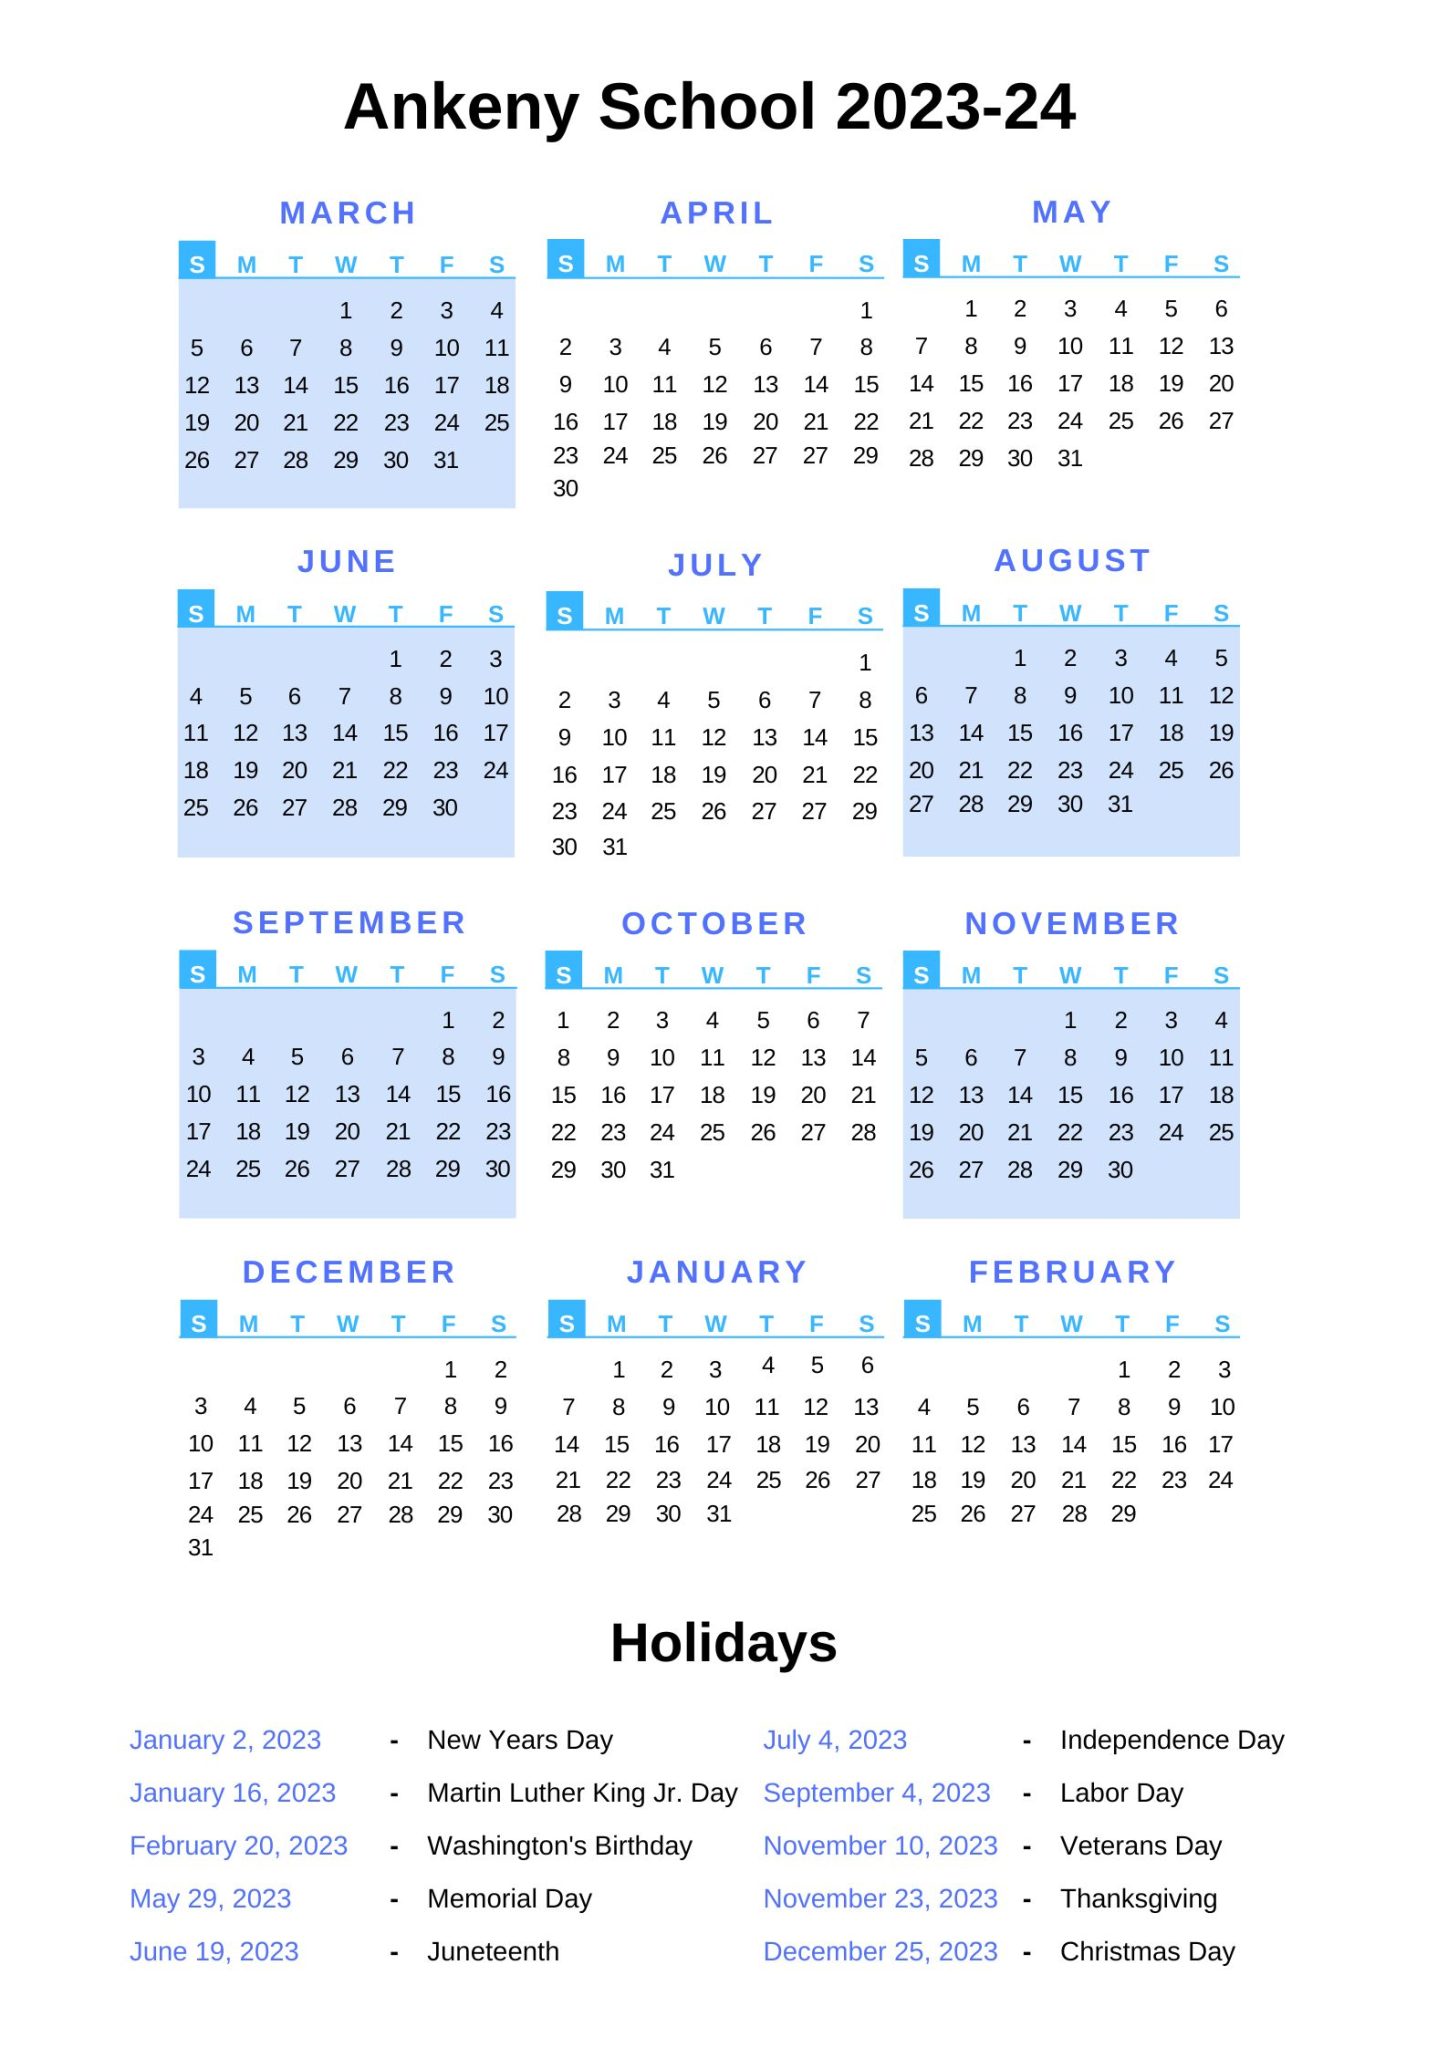 ankeny-schools-calendar-2023-24-with-holidays